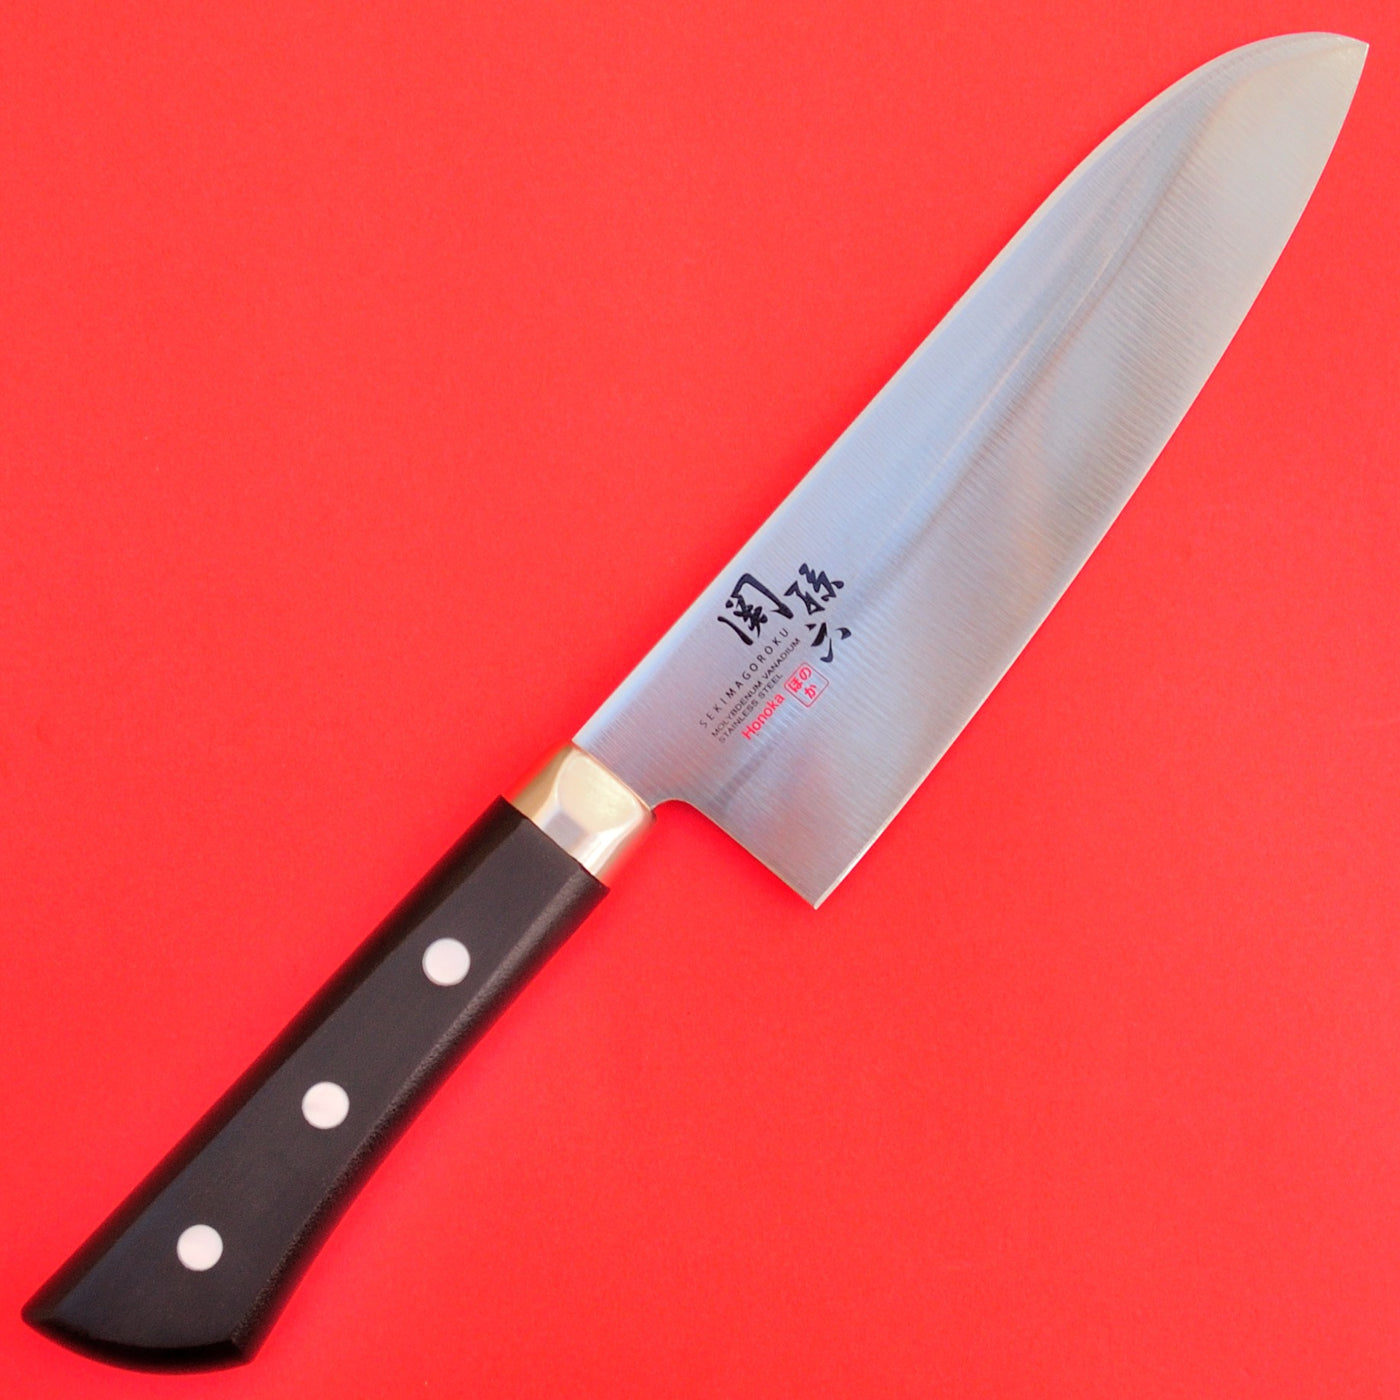  KEEMAKE Santoku Knife Set of 2pcs, Japanese Chef Knife